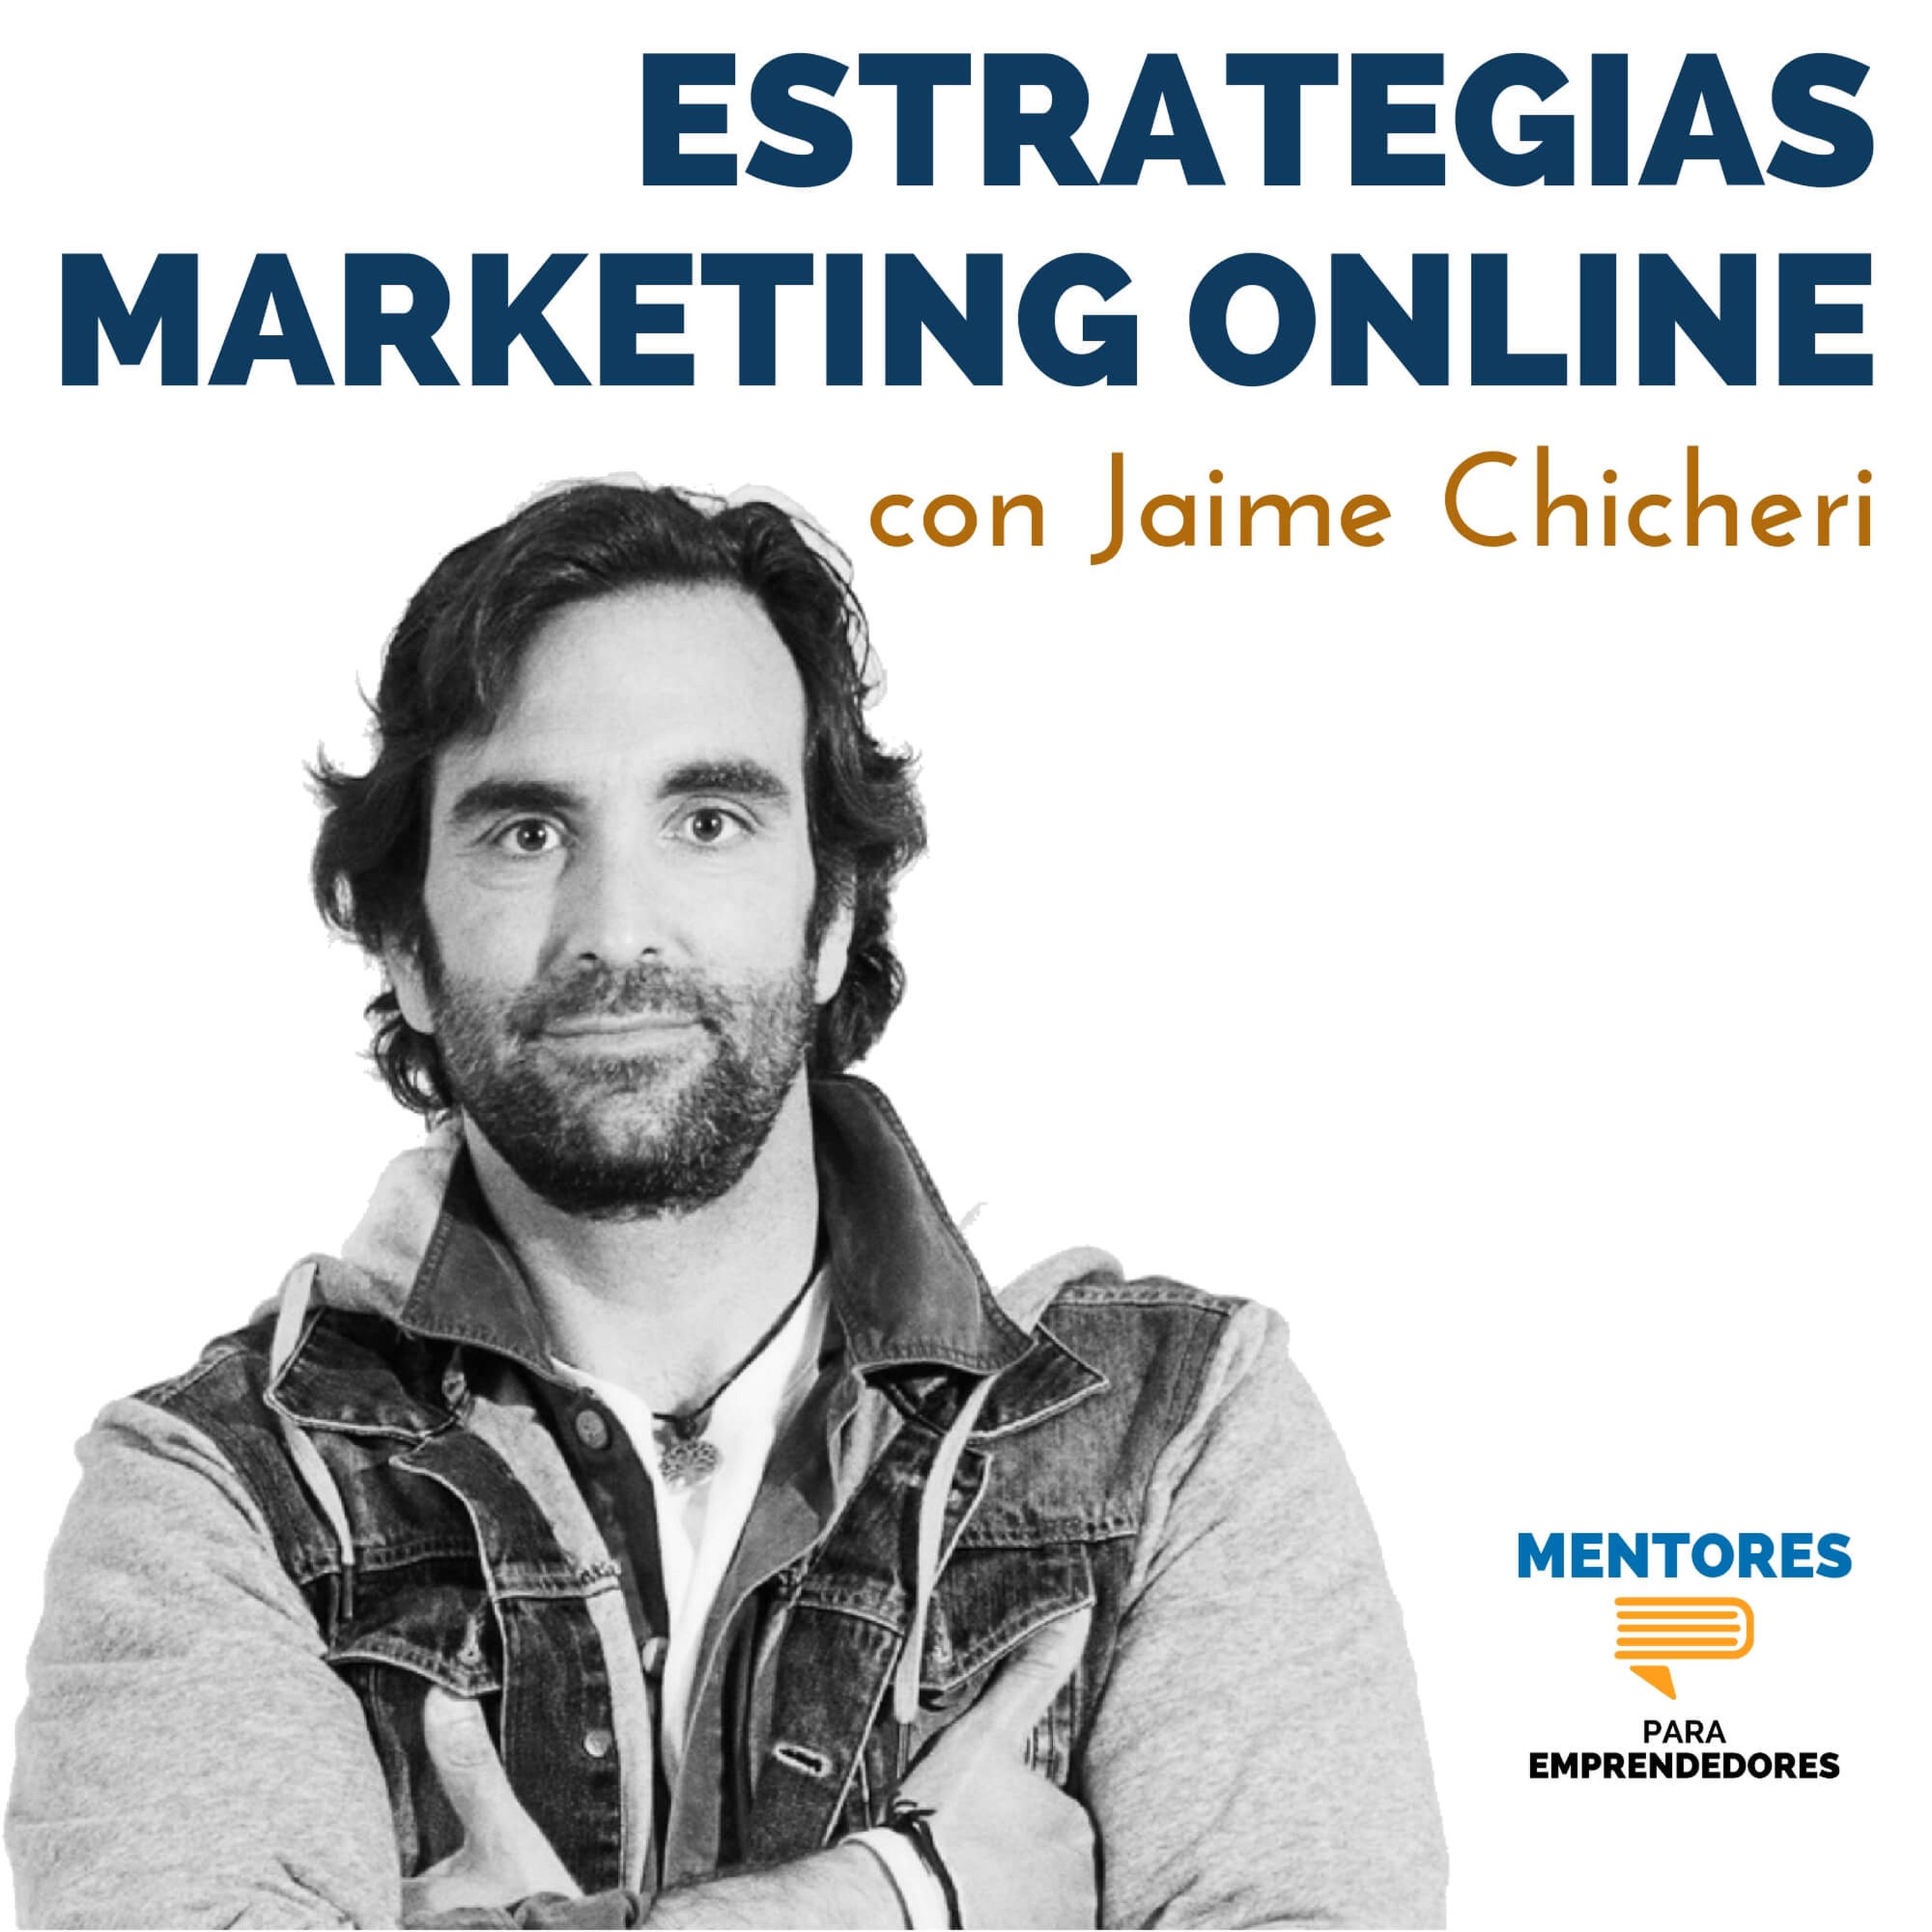 Estrategias exitosas de marketing online, con Jaime Chicheri - MENTORES